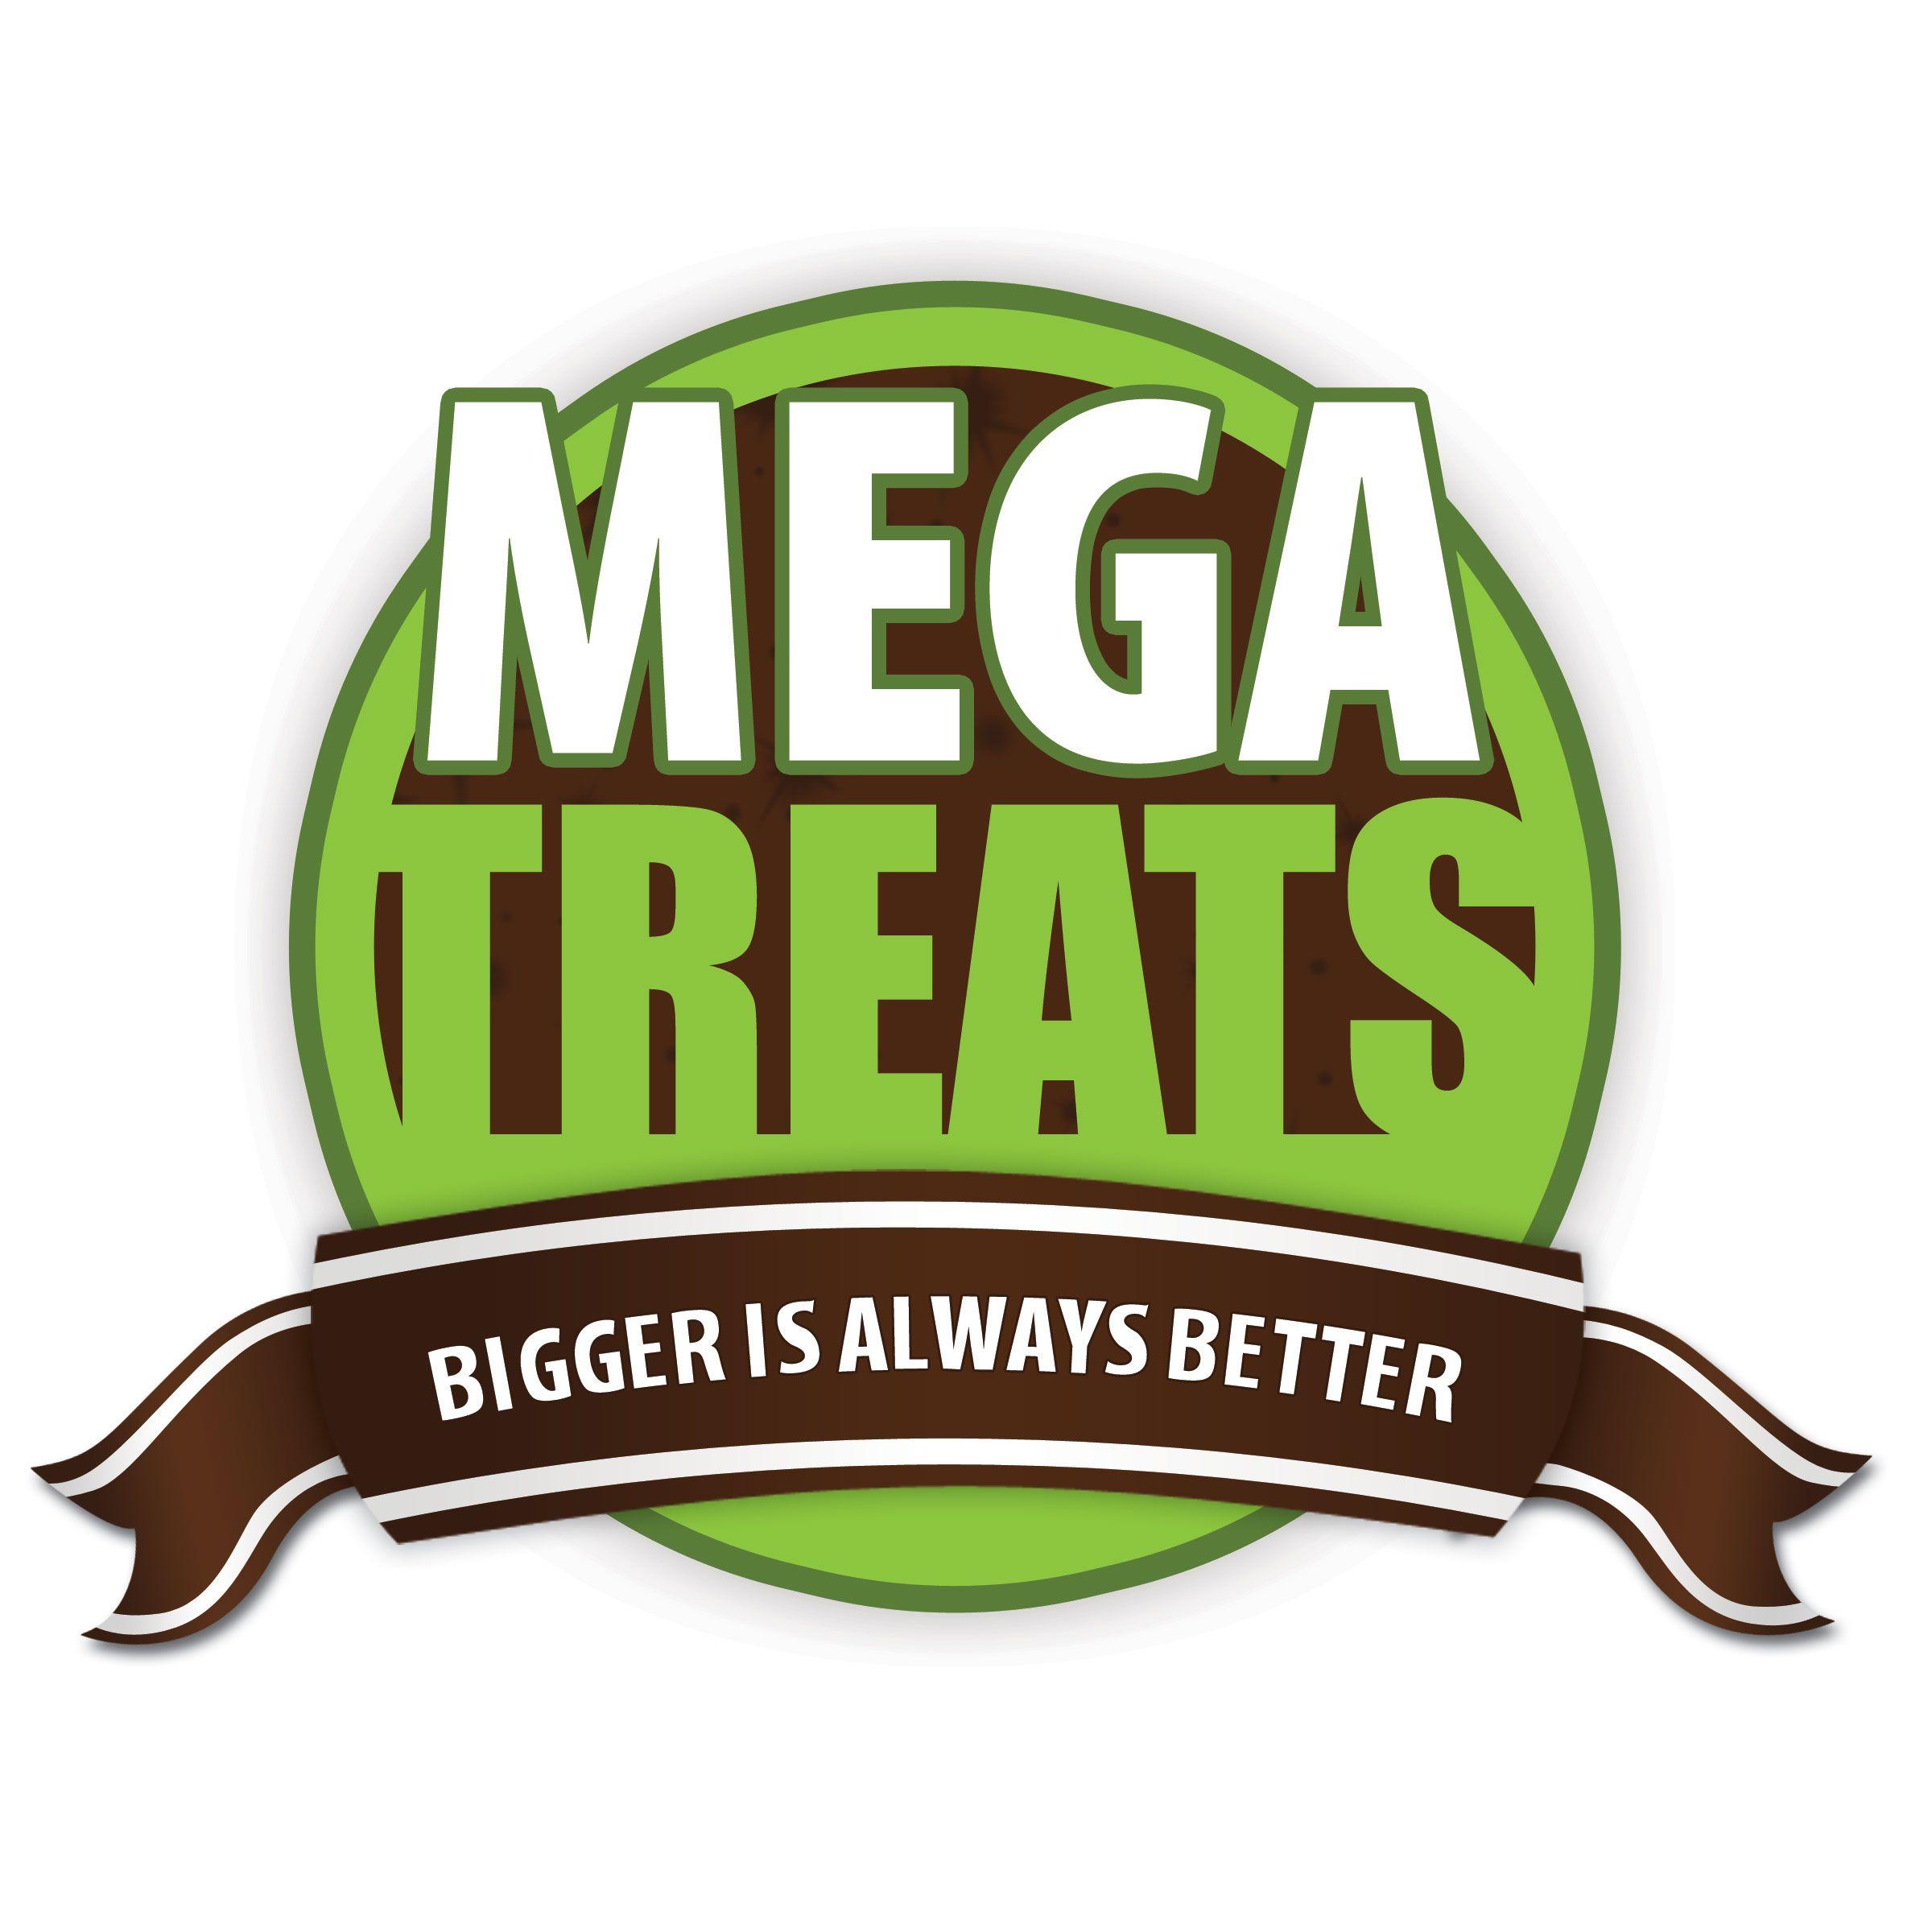 Hershey Ice Cream Logo - Hershey's Ice Cream MEGA Treats Logo | Portfolio | Pinterest ...